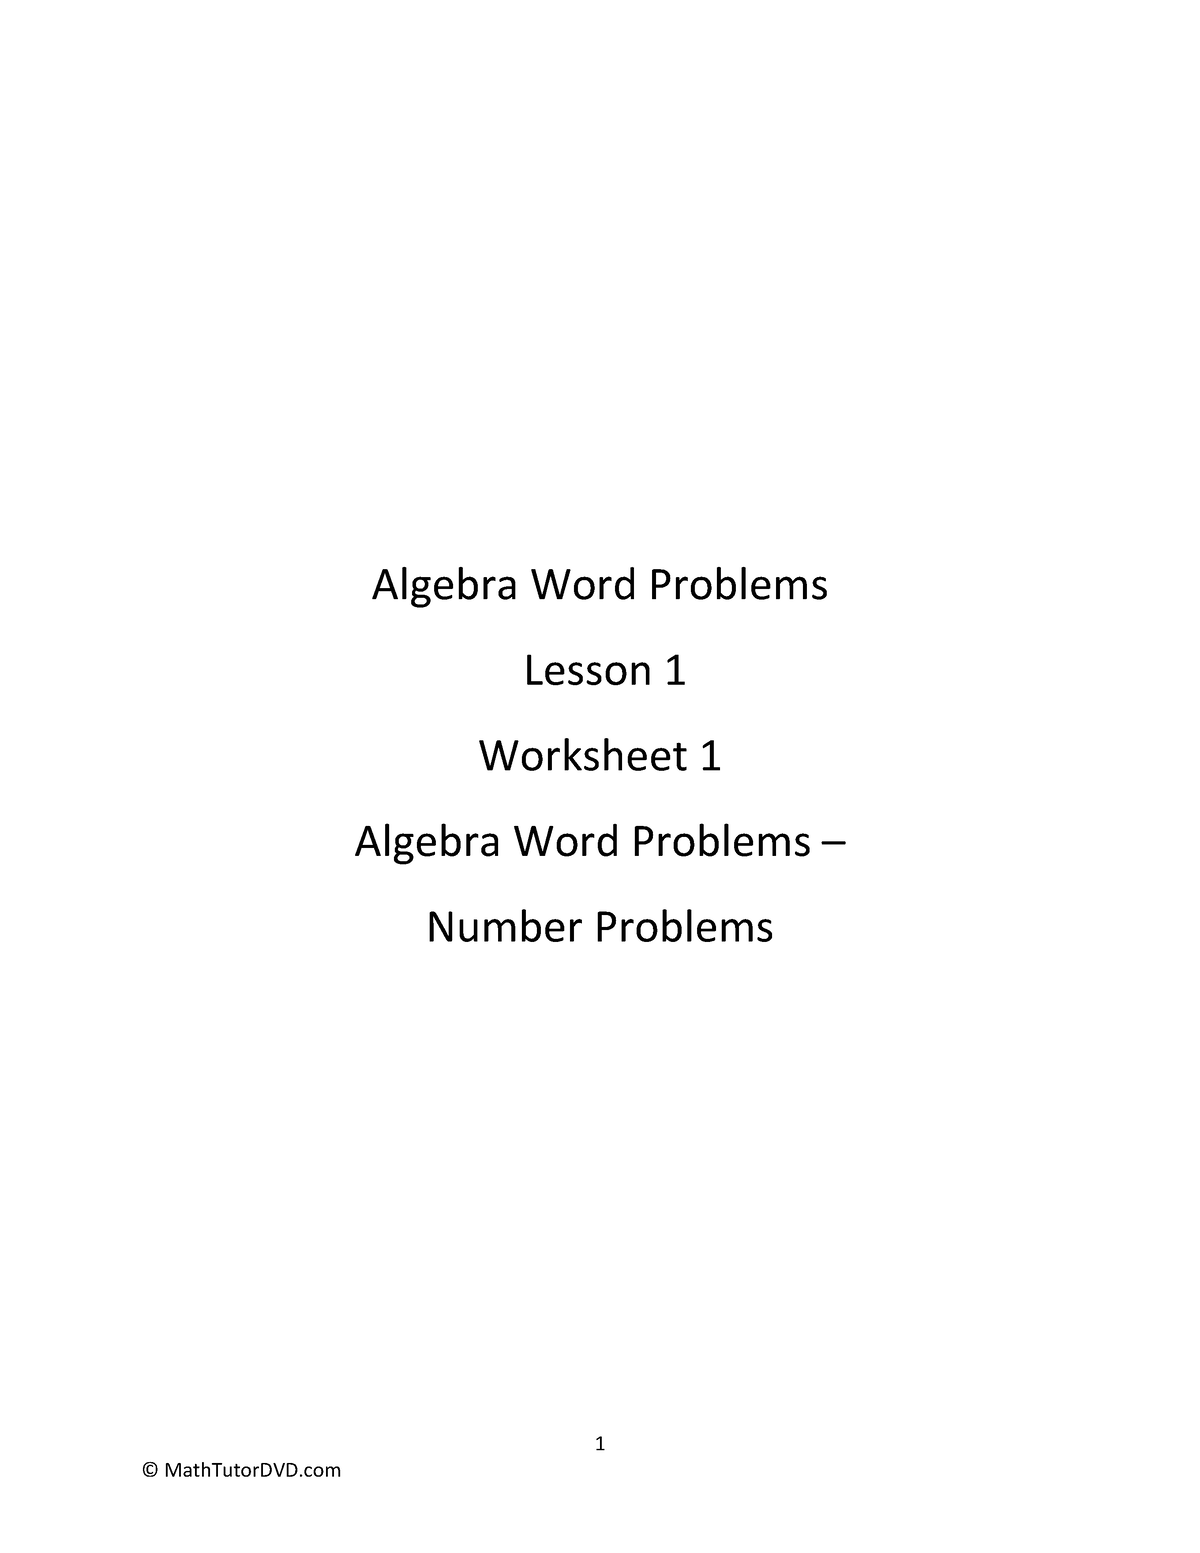 algebra-word-problems-worksheet-1-number-problems-english81-studocu